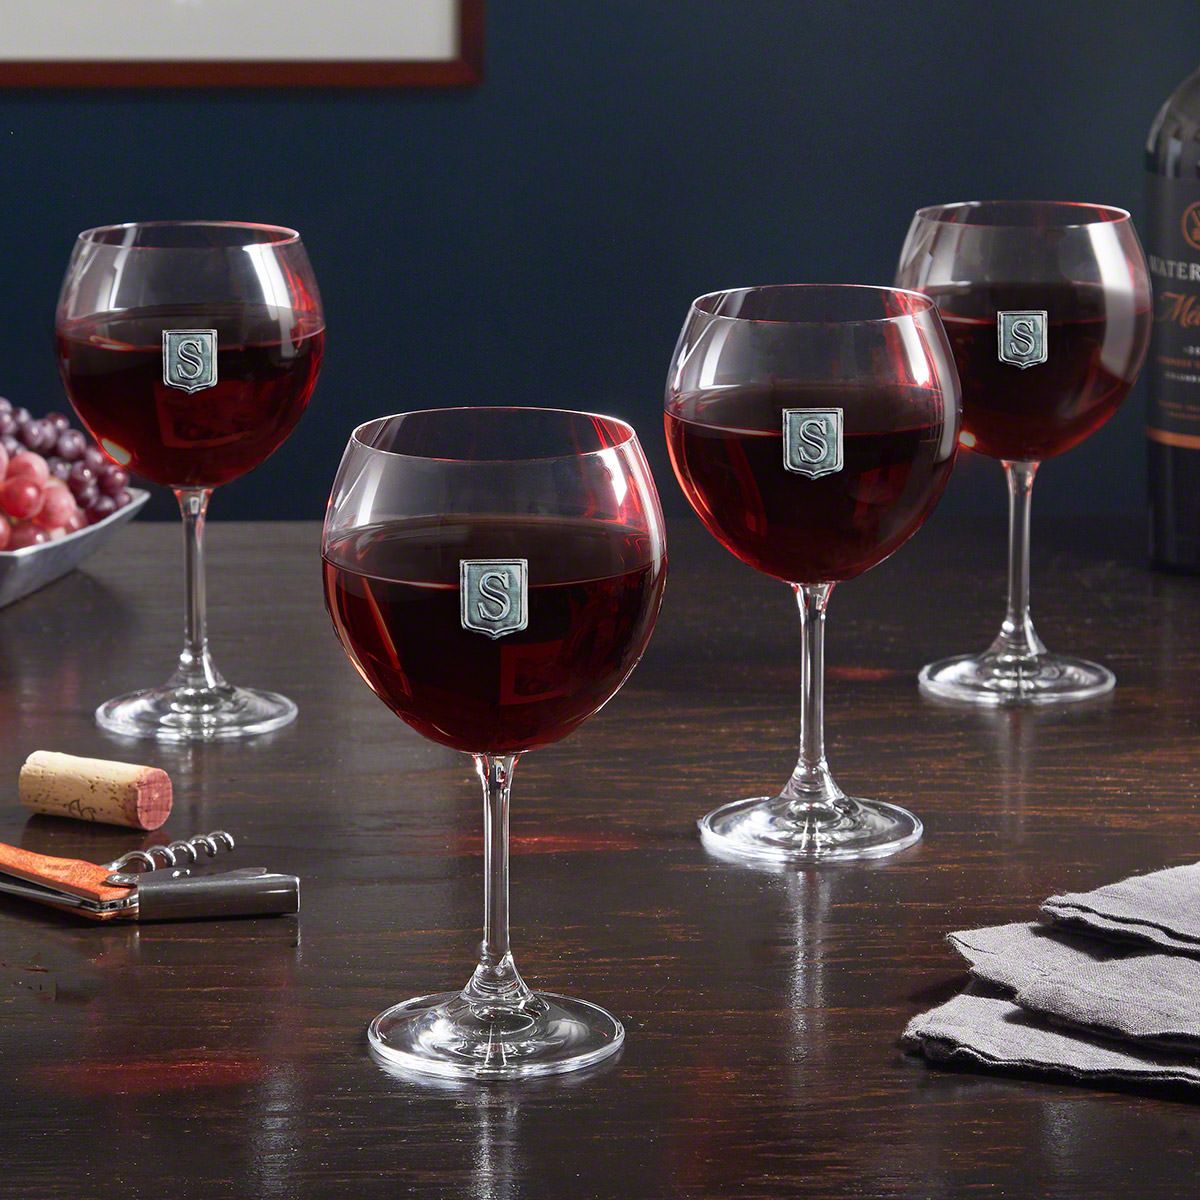 https://images.homewetbar.com/media/catalog/product/6/0/6071-regal-crest-monogrammed-red-wine-glasses-set-of-four-primary-up-9-20.jpg?store=default&image-type=image